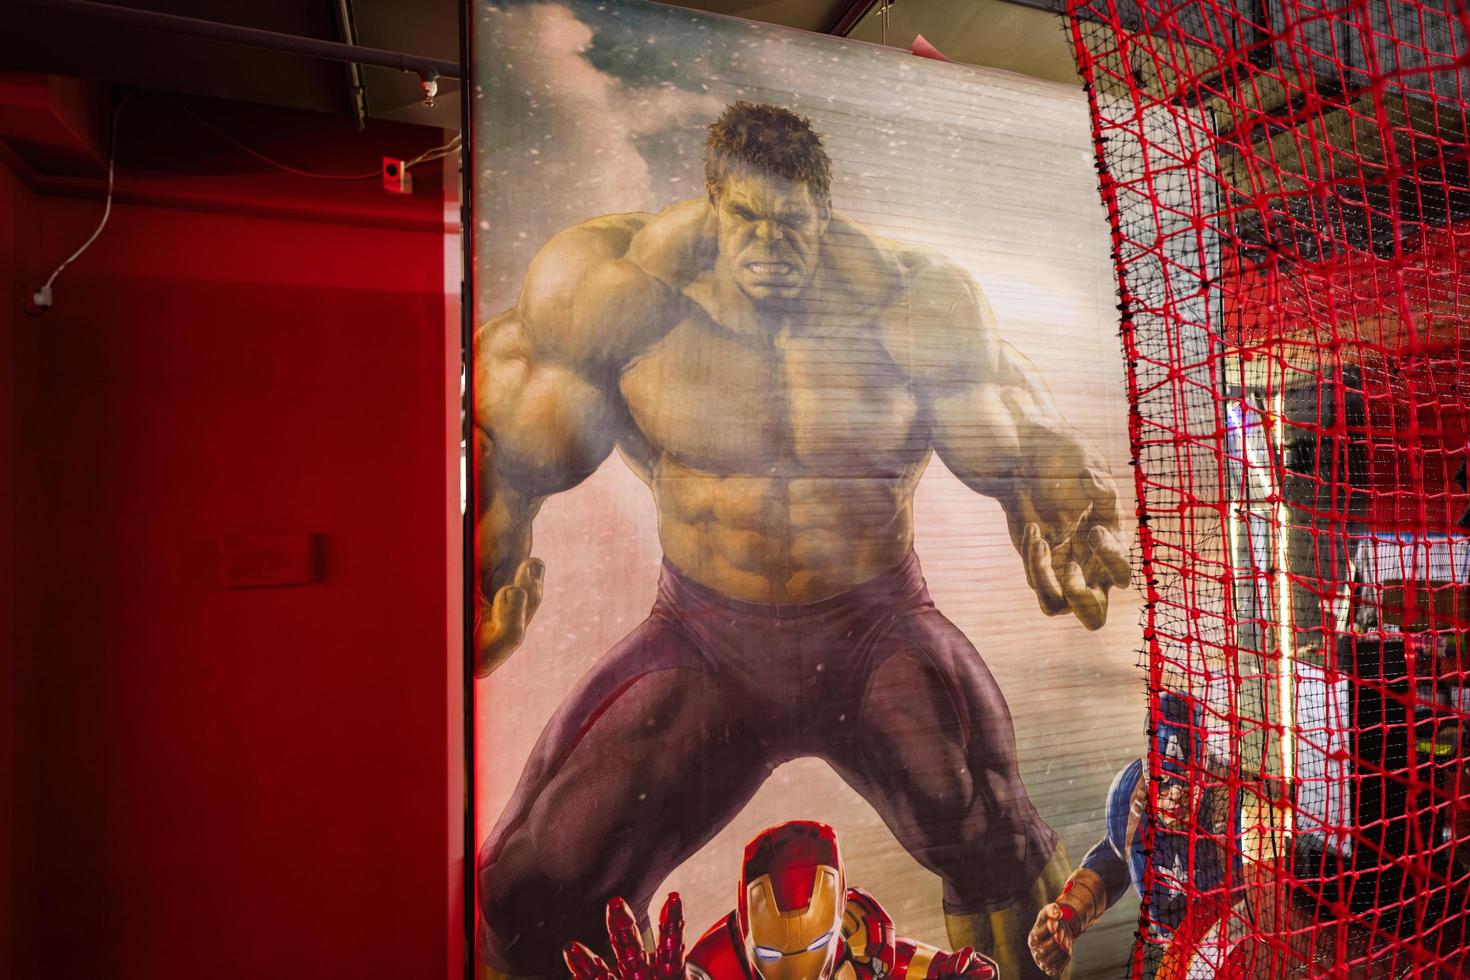 Hulk poster in kids play room. photo